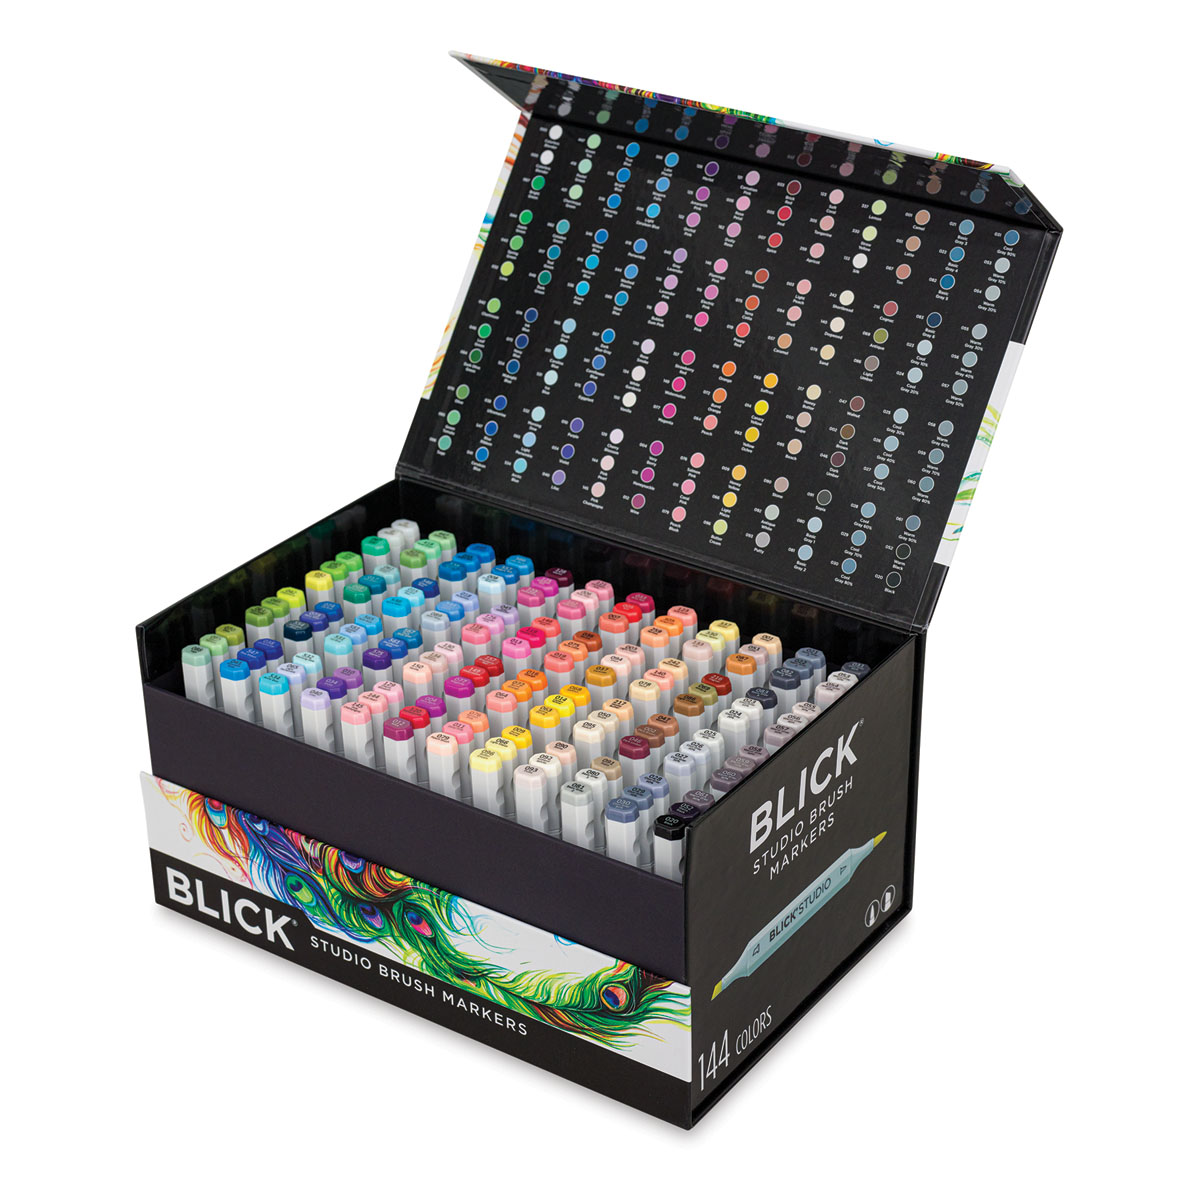 Blick Studio Brush Markers - Set of 144, Assorted